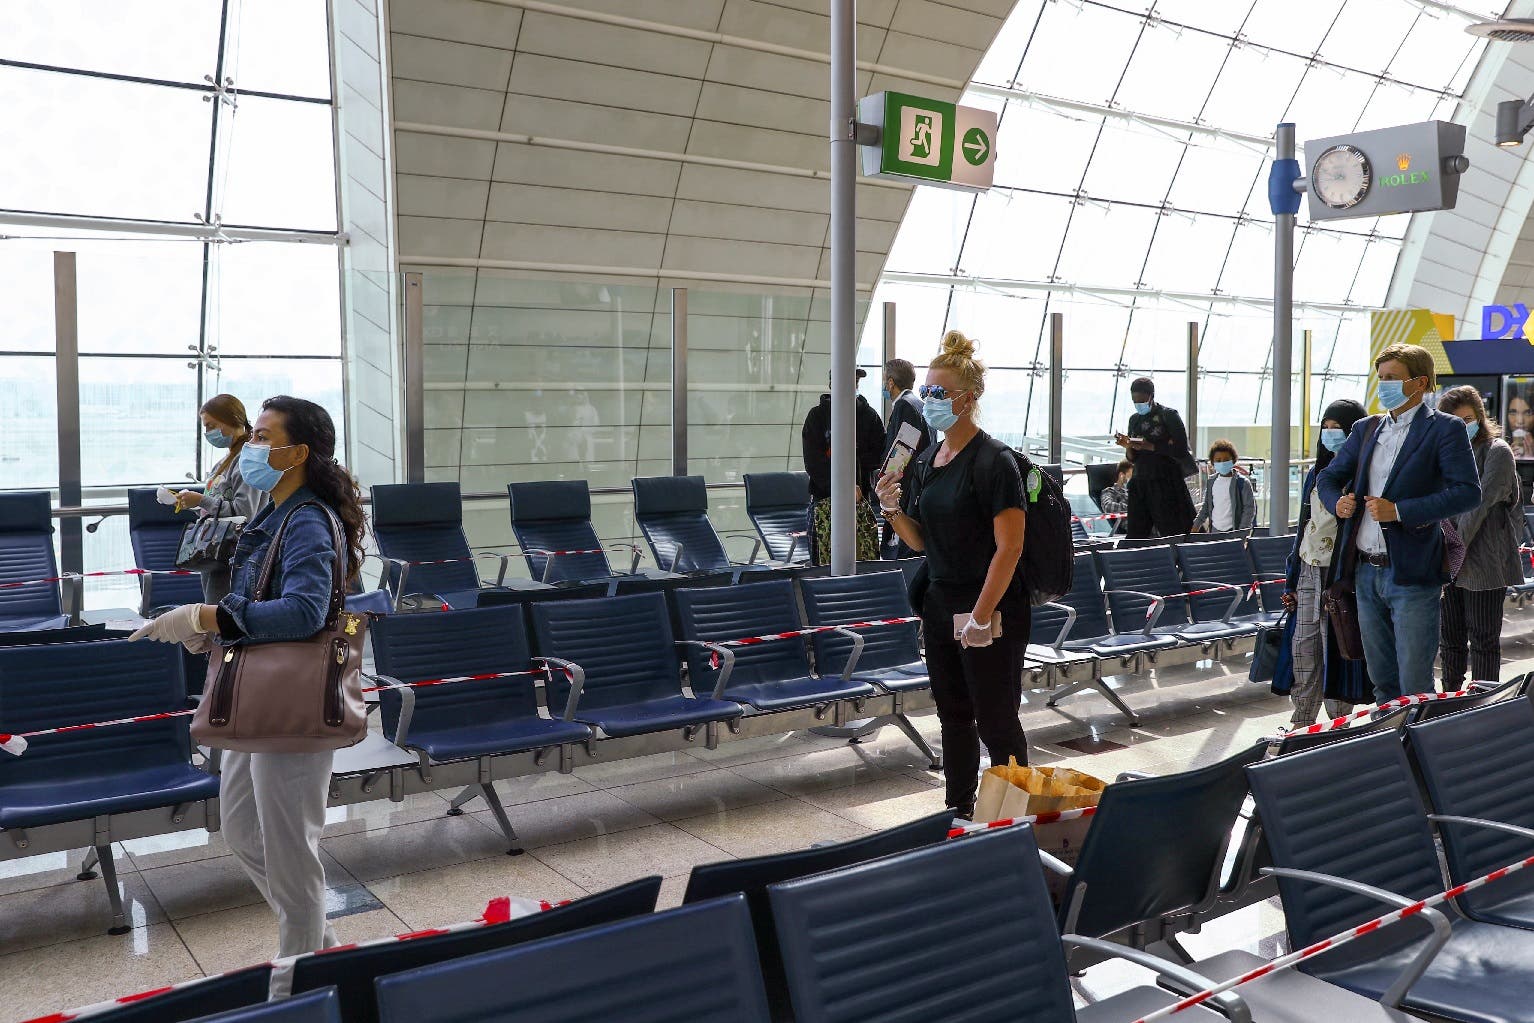 Passengers keep distance in a line at Dubai International Airport amid the outbreak of the coronavirus in Dubai, UAE, April 27, 2020. (Reuters)